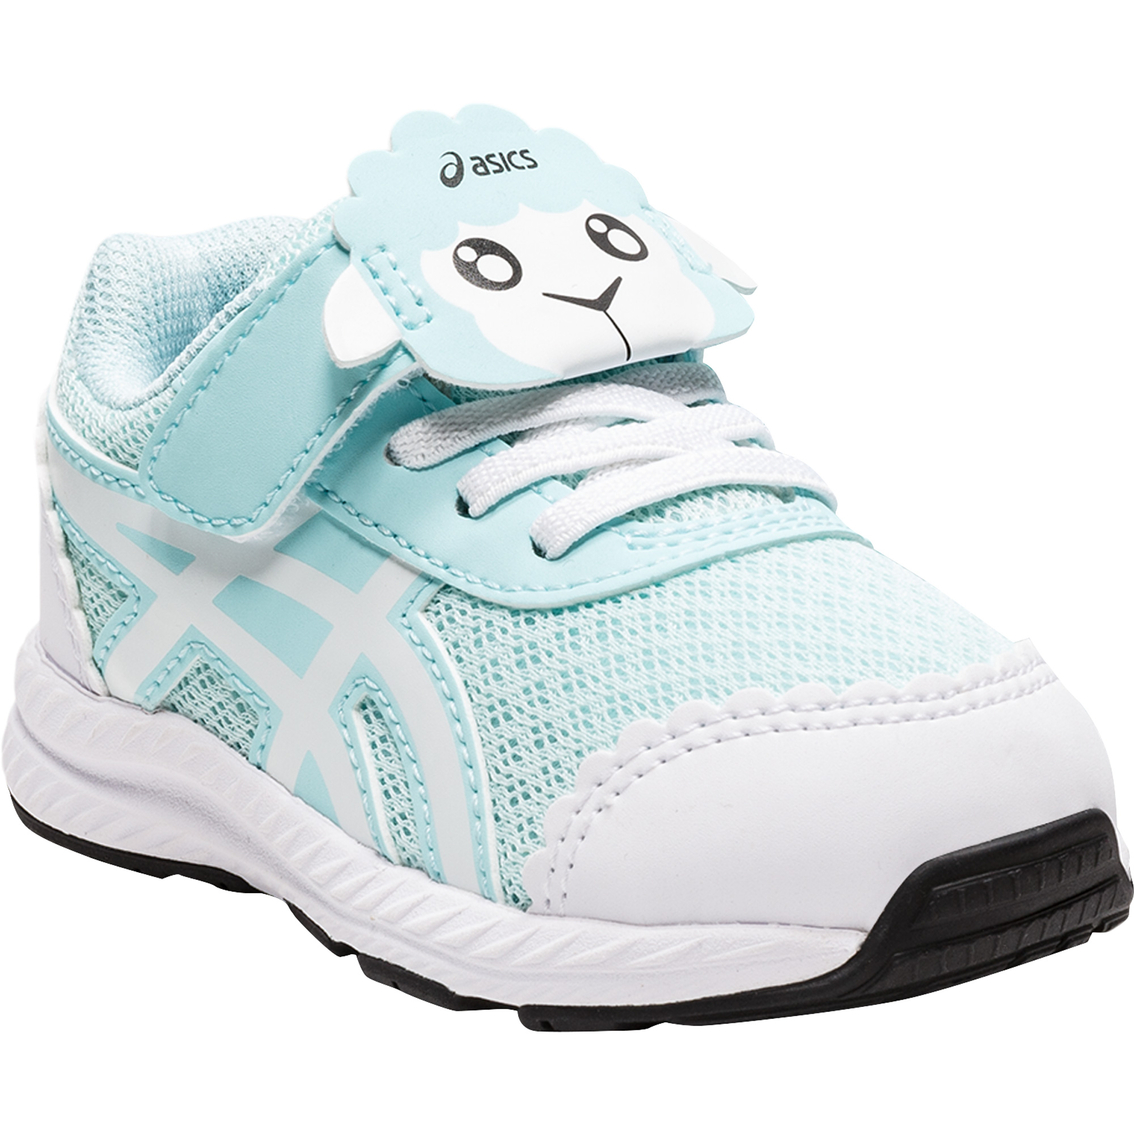 ASICS Toddler Girls Contend 7 School Yard Running Shoes - Image 1 of 7